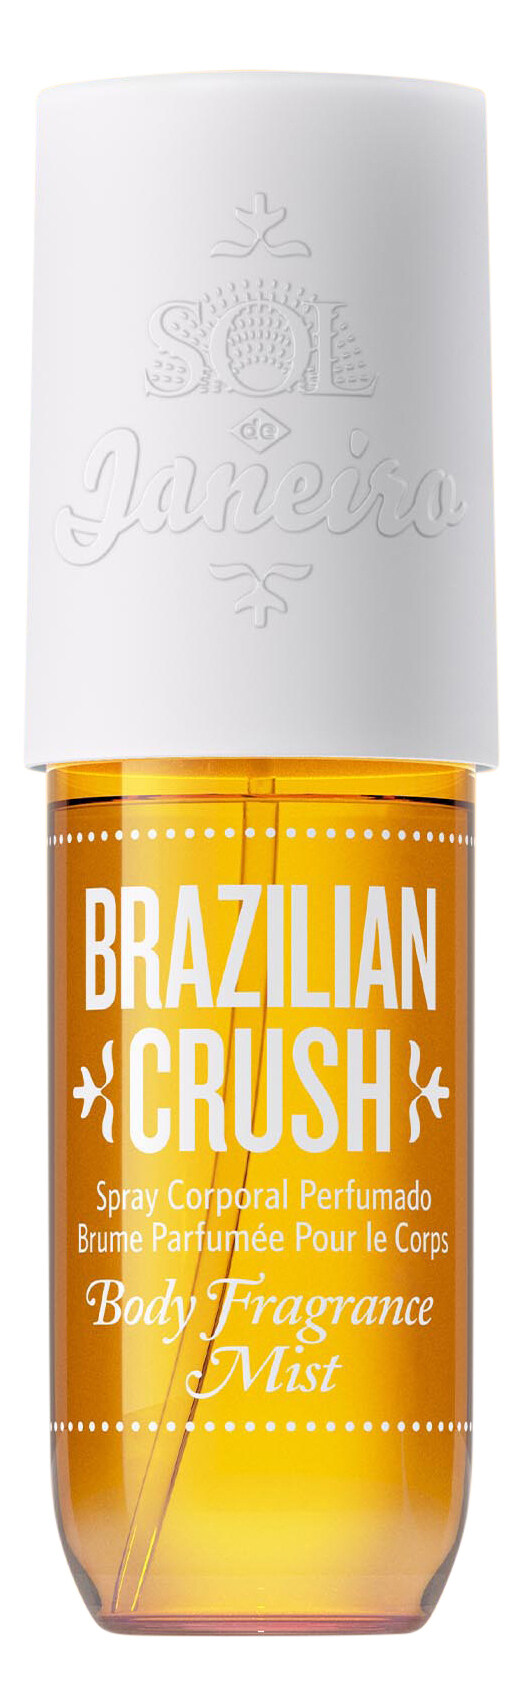 Sol de Janeiro Rio Radiance Perfume Mist 8 oz